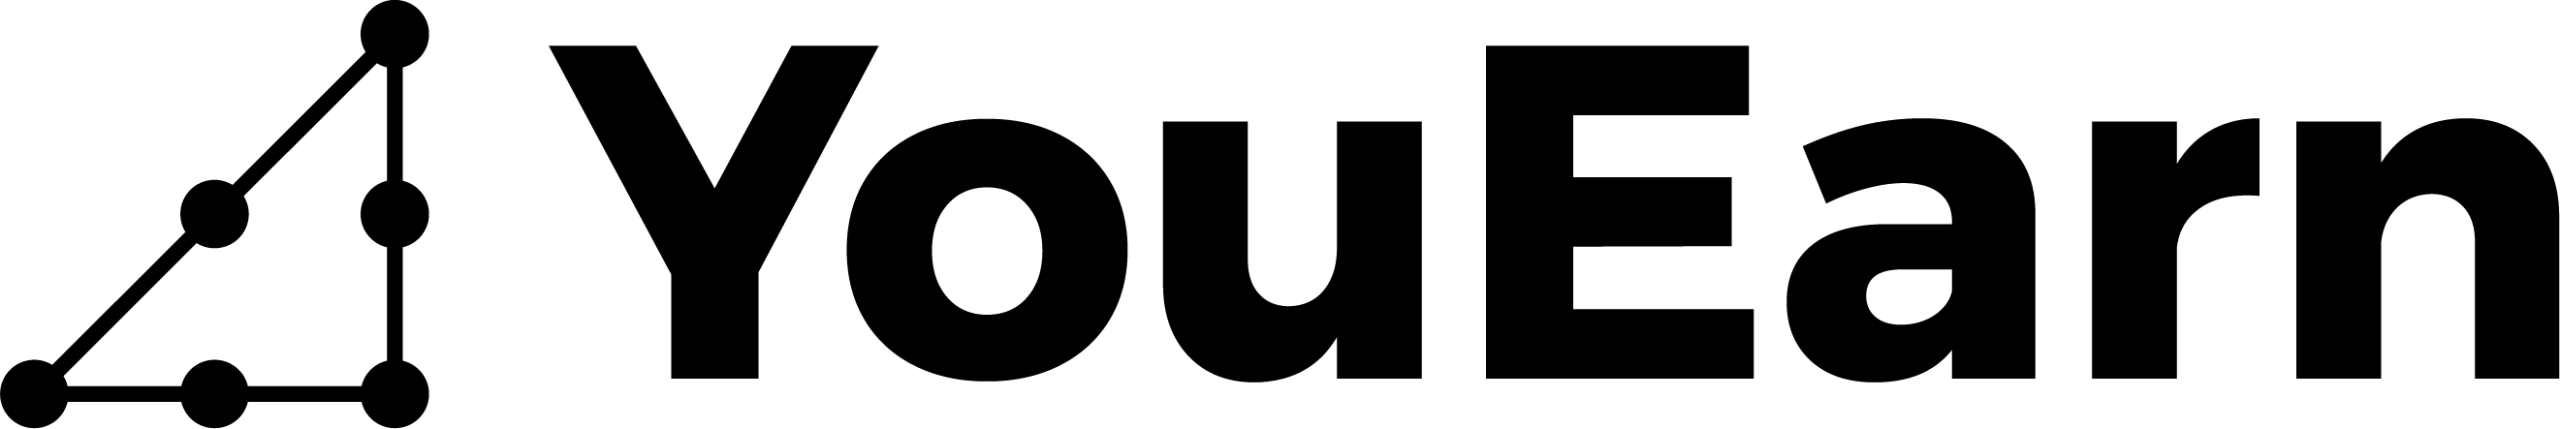 youearn logo